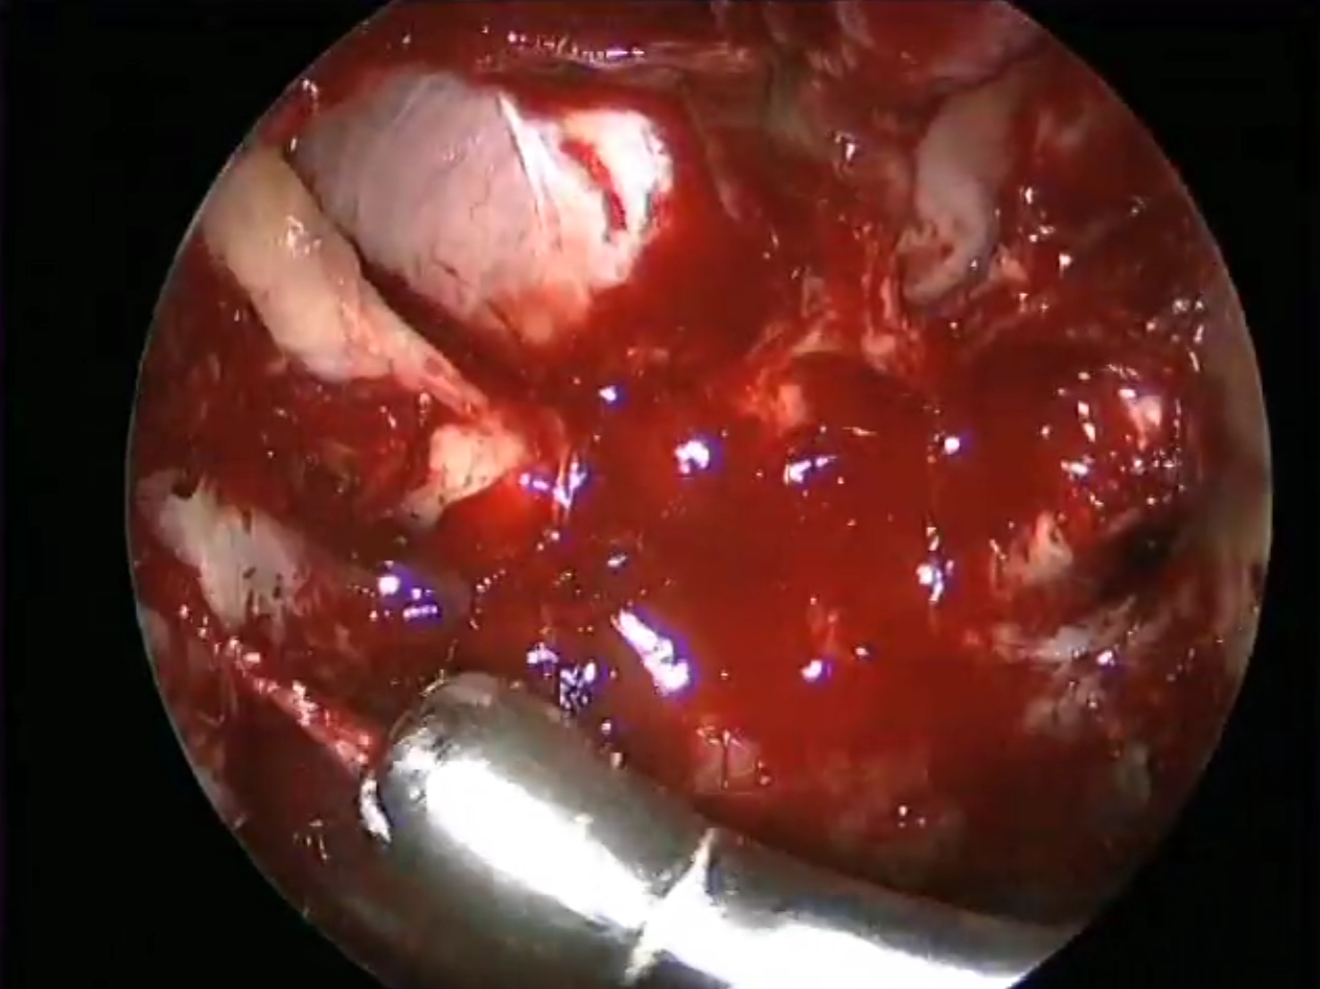 endoscopic optic nerve anatomy video thumbnail.